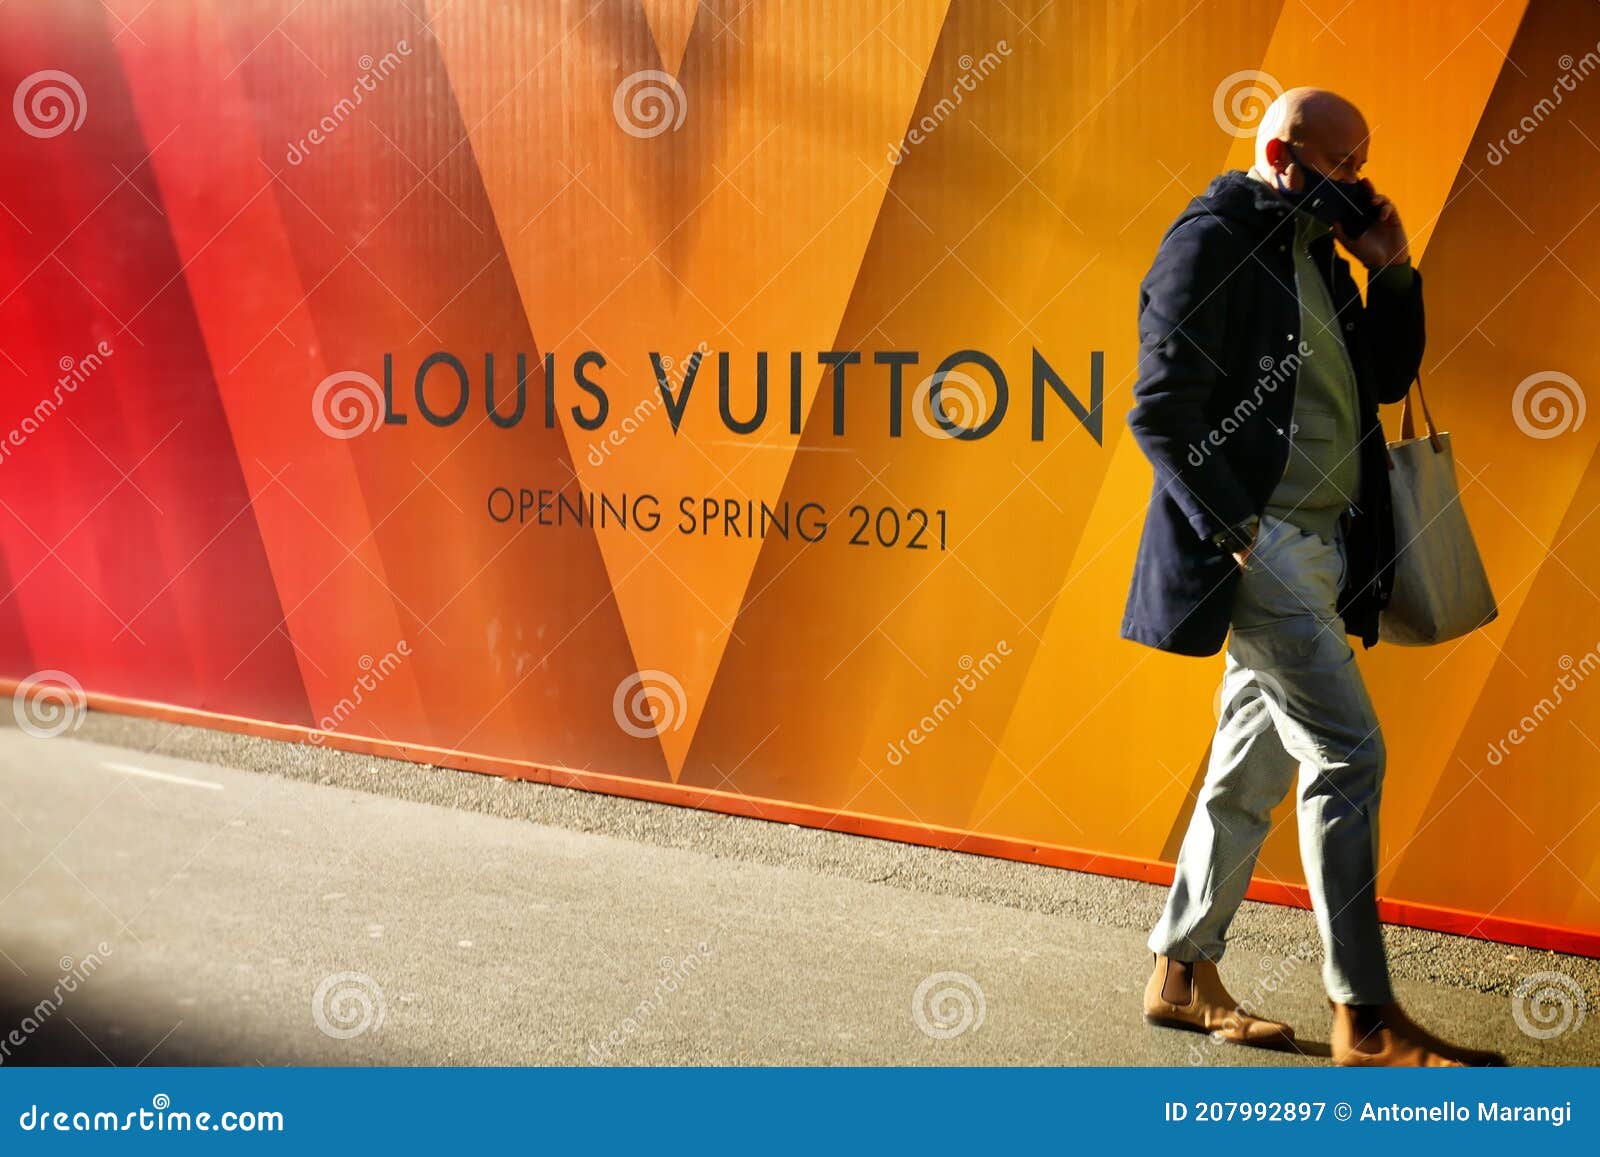 LOUIS VUITTON 2021 COLLECTION, LUXURY SHOPPING